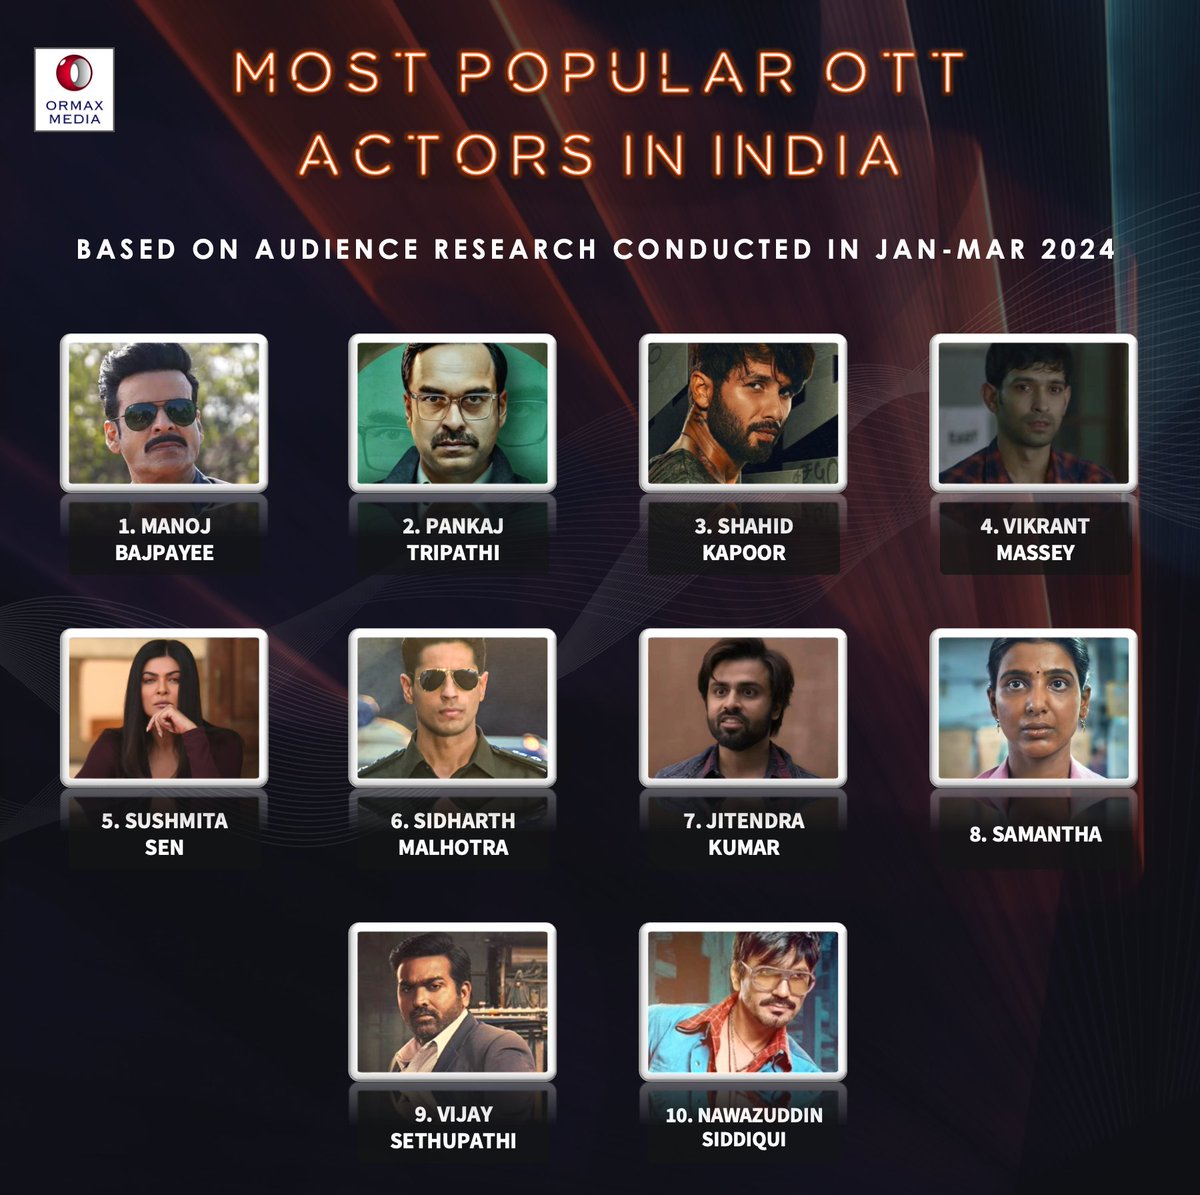 Most popular OTT actors in India for Jan-March 2024 as per #Ormax:

1. #ManojBajpayee
2. #PankajTripathi
3. #ShahidKapoor 
4. #VikrantMassey
5. #SushmitaSen
6. #SidharthMalhotra 
7. #JitendraKumar
8. #SamanthaRuthPrabhu 
9. #VijaySethupathi
10. #NawazuddinSiddiqui

Agree??